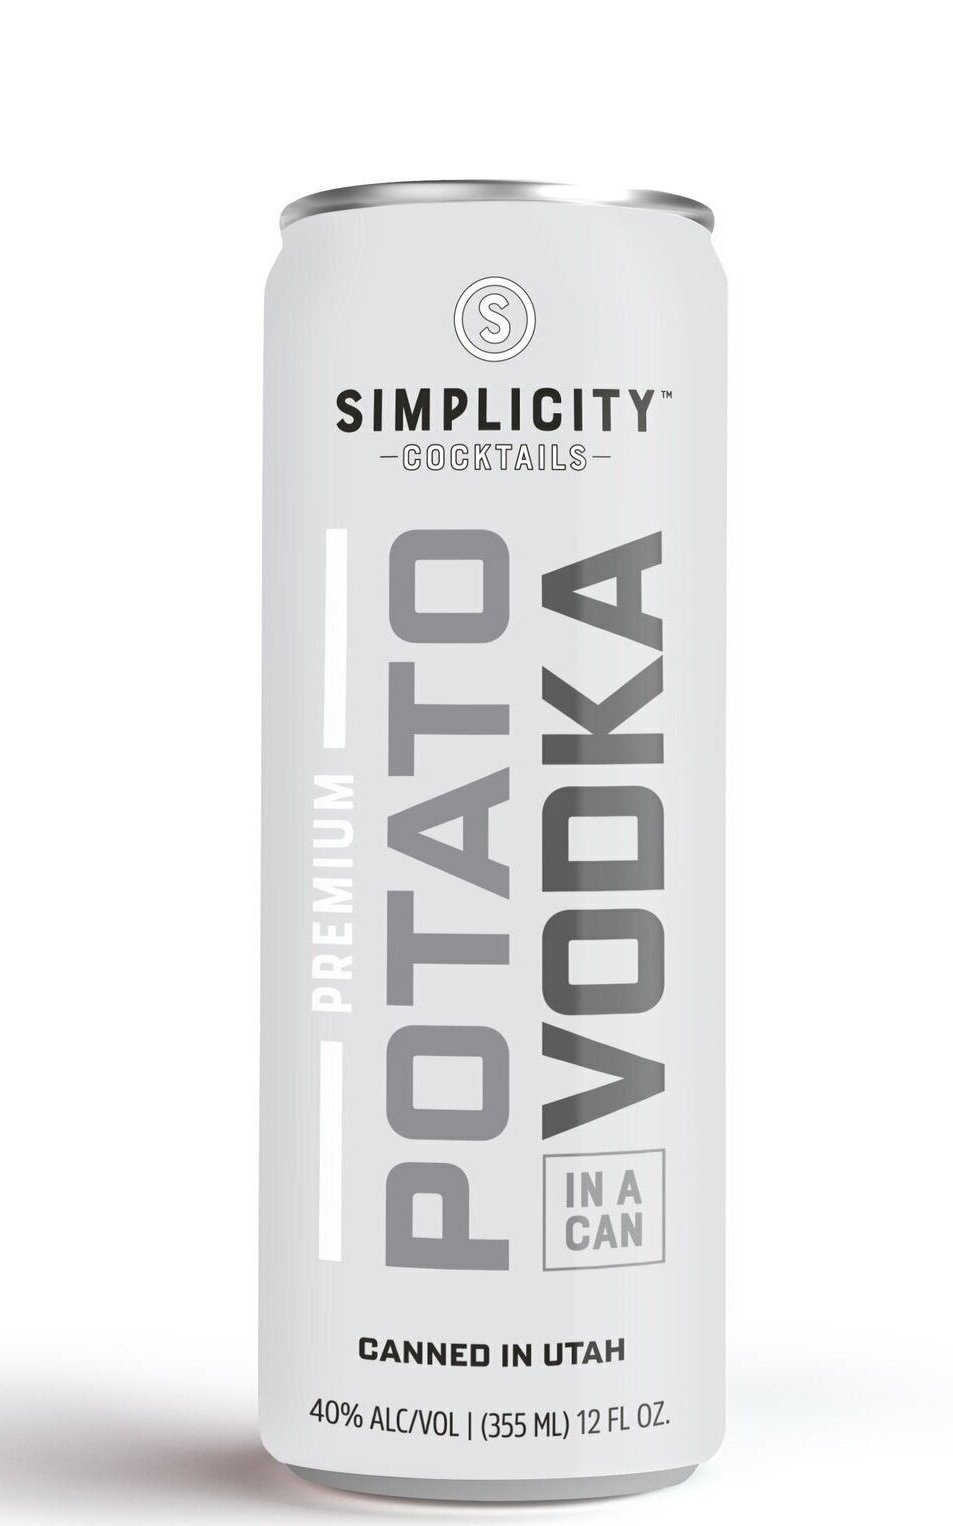 Vodka12ozcan.jpg